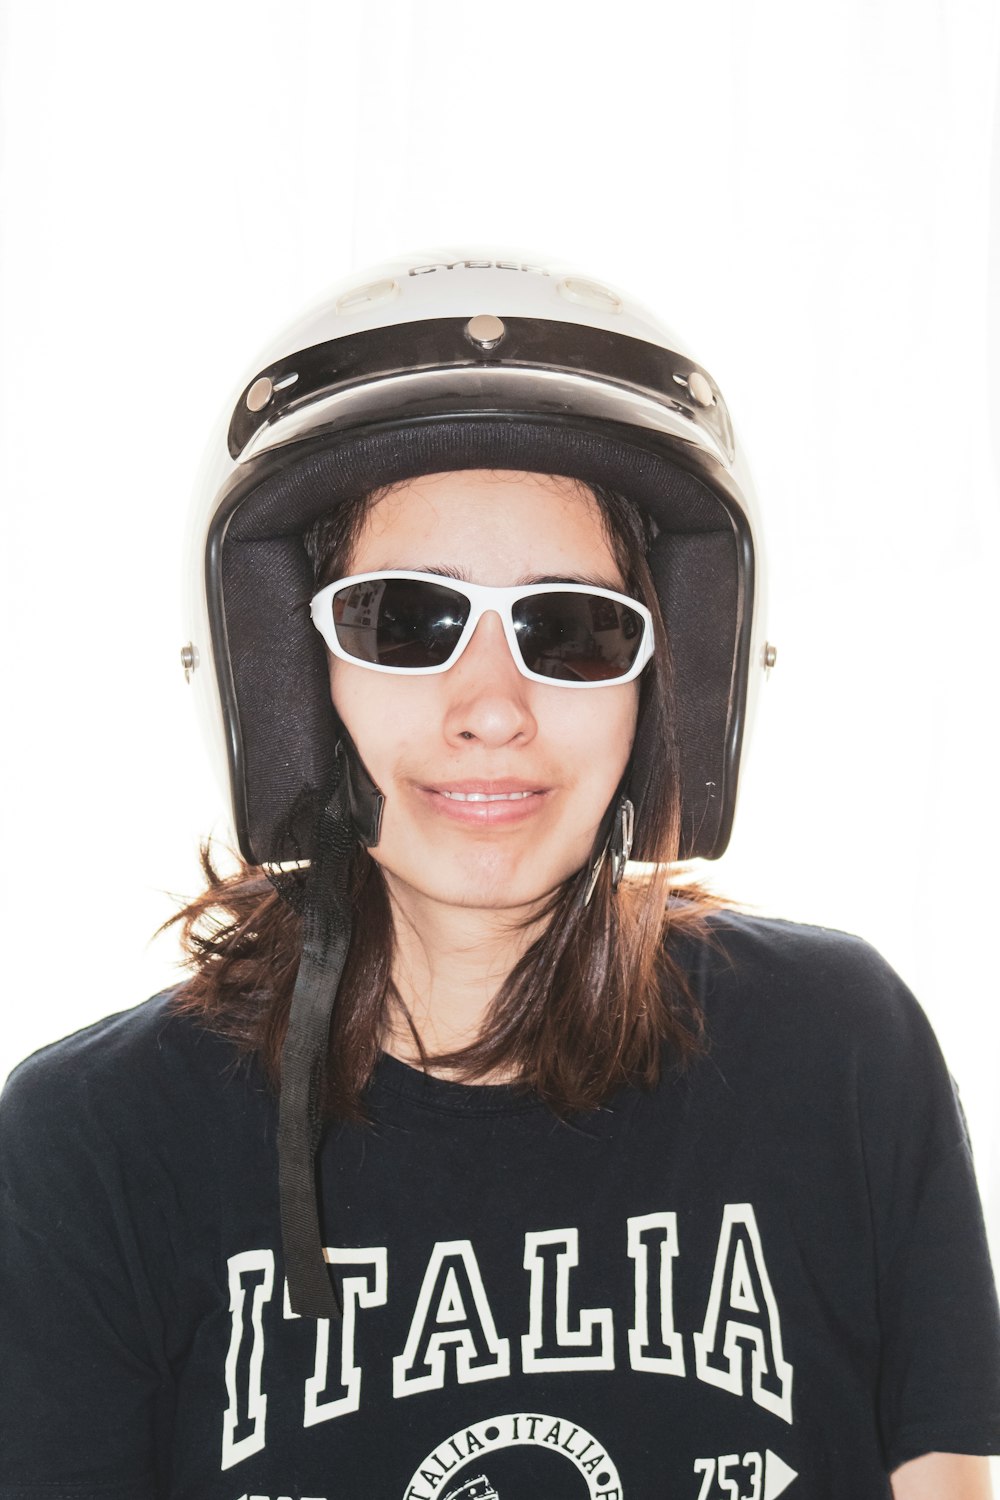 woman in black crew neck shirt wearing black and white helmet